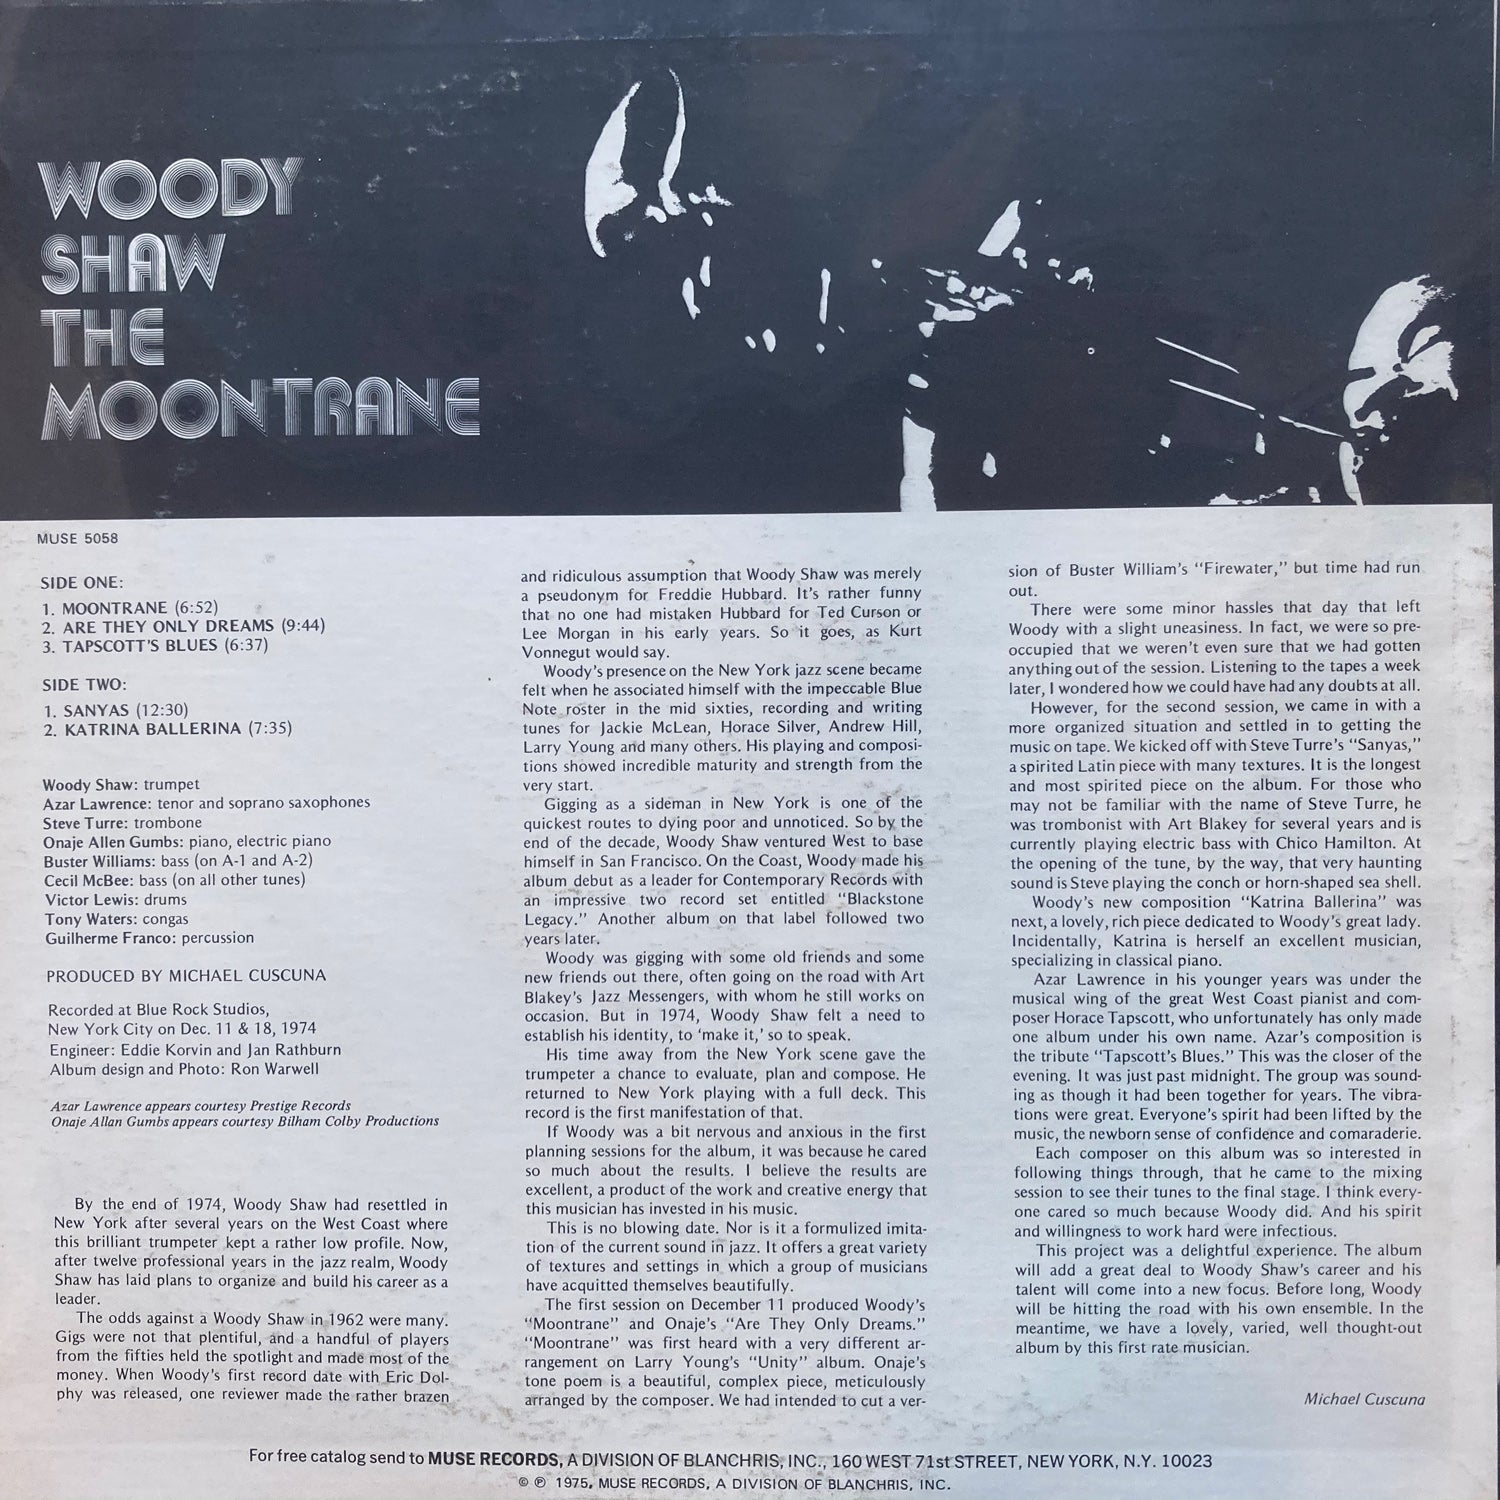 Woody Shaw - The Moontrane